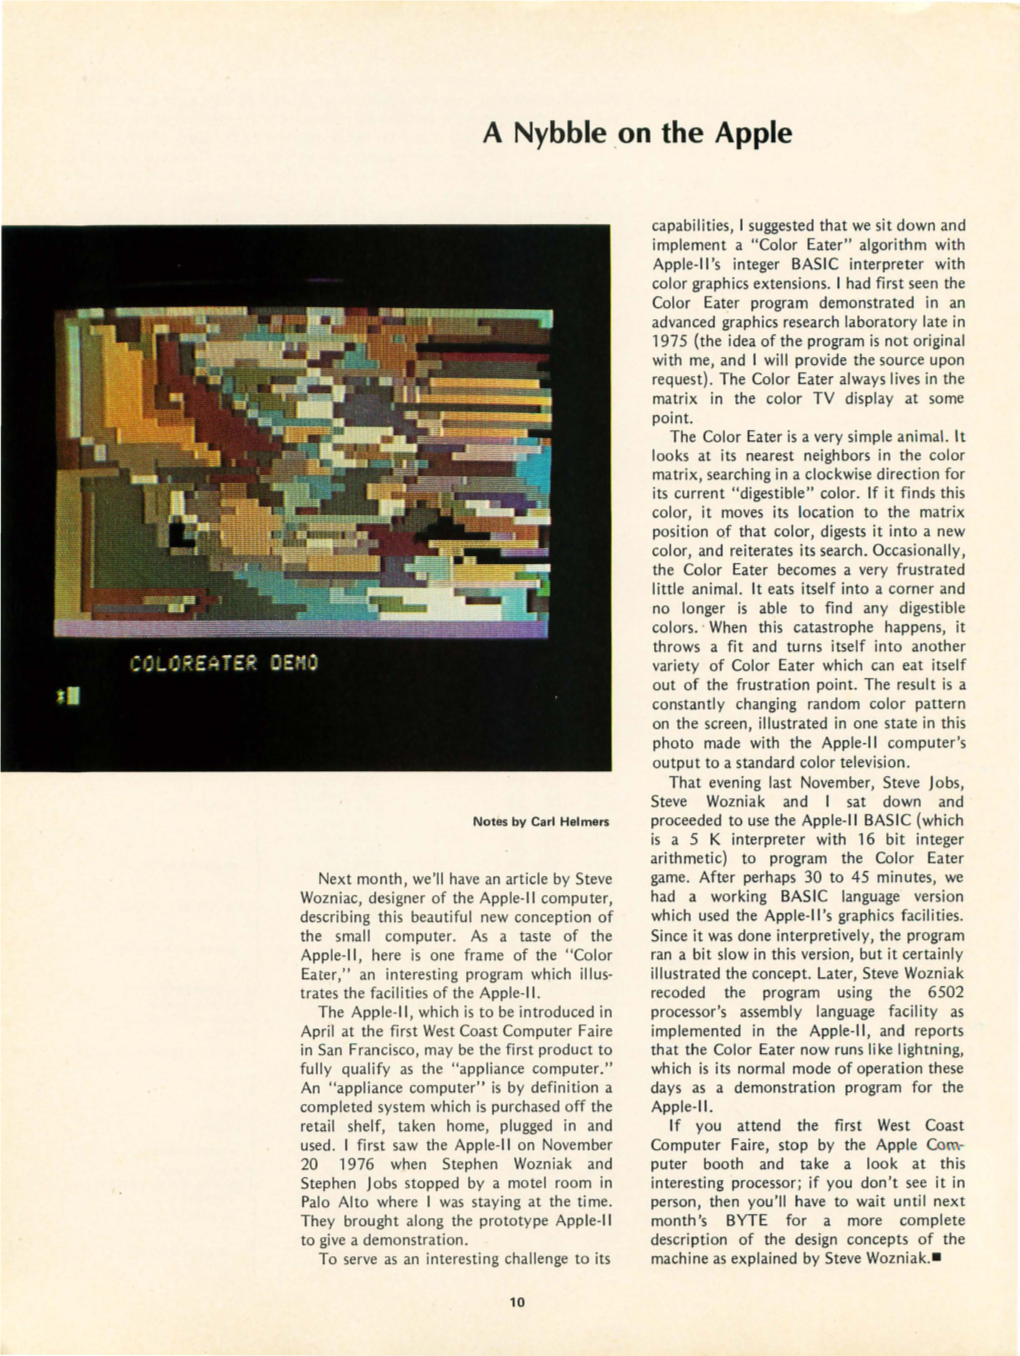 A Nybble on the Apple, April 1977, BYTE Magazine